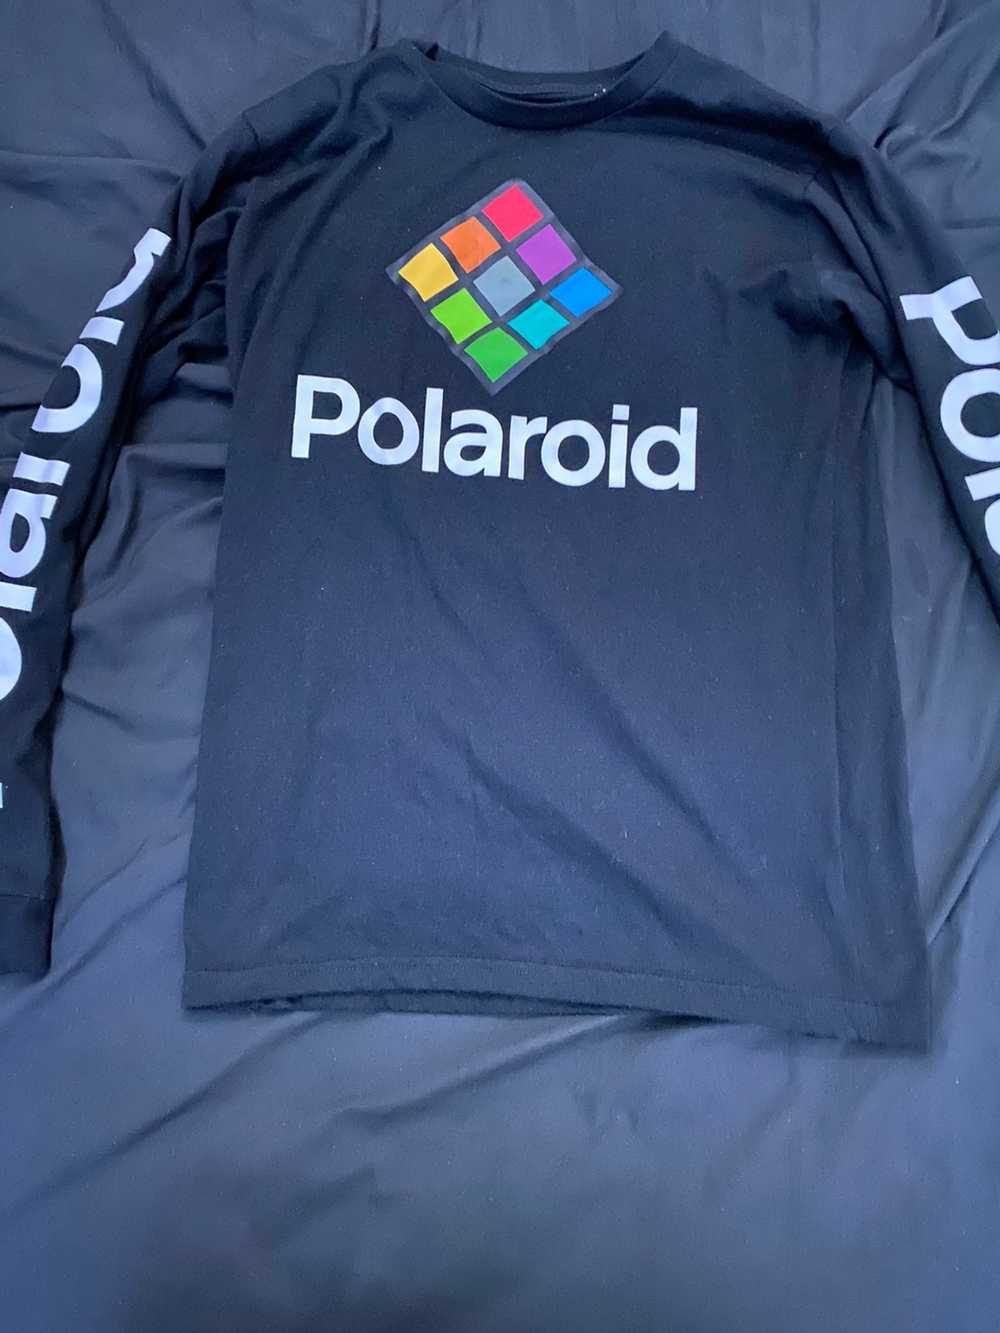 Polaroid Polaroid black long sleeve shirt - image 1